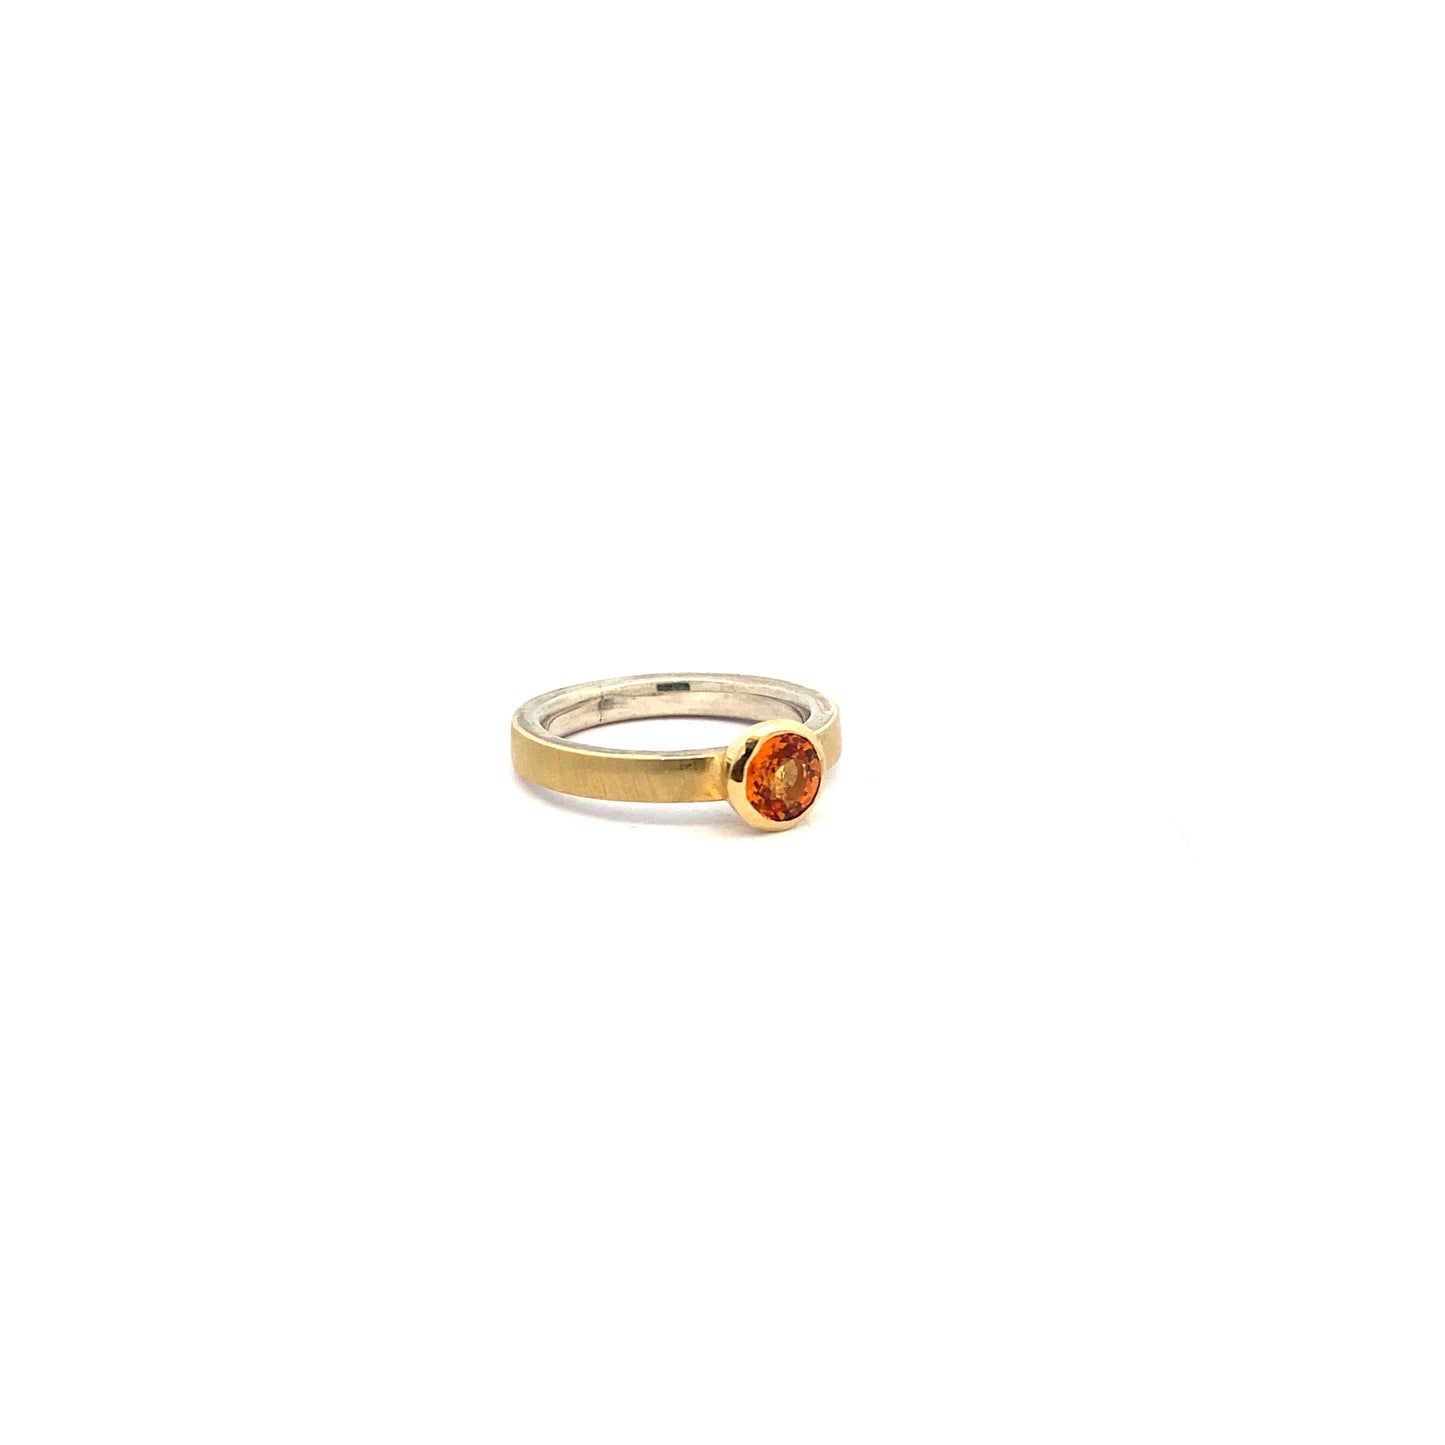 Dark Orange Sapphire Ring with 18ct Gold Overlay